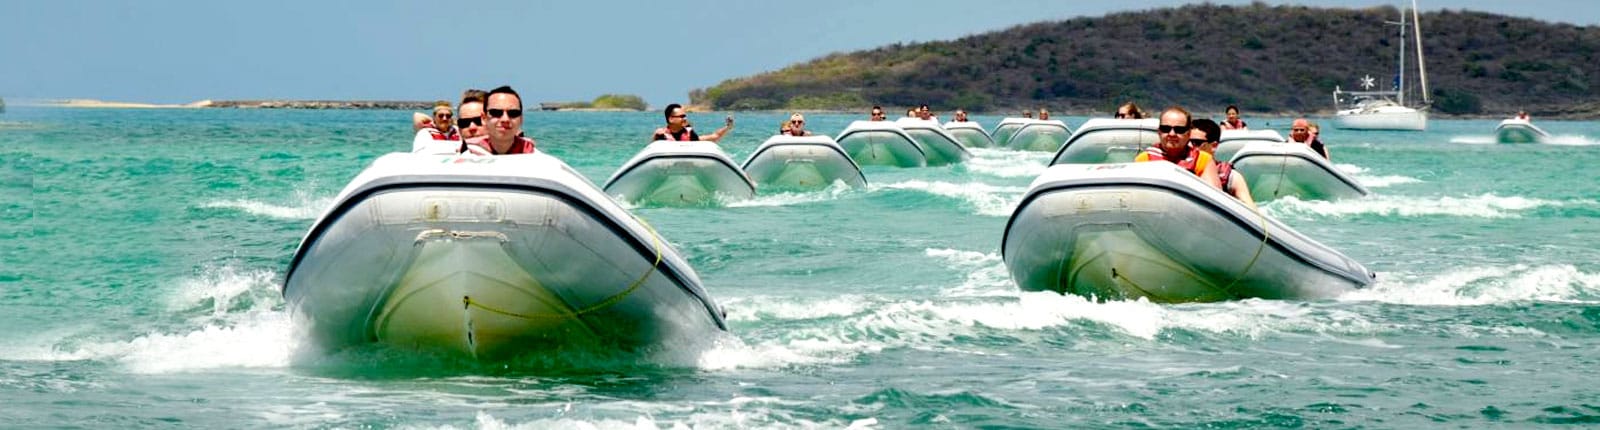 Motorboats cruising in formation in blue waters off St. Maarten